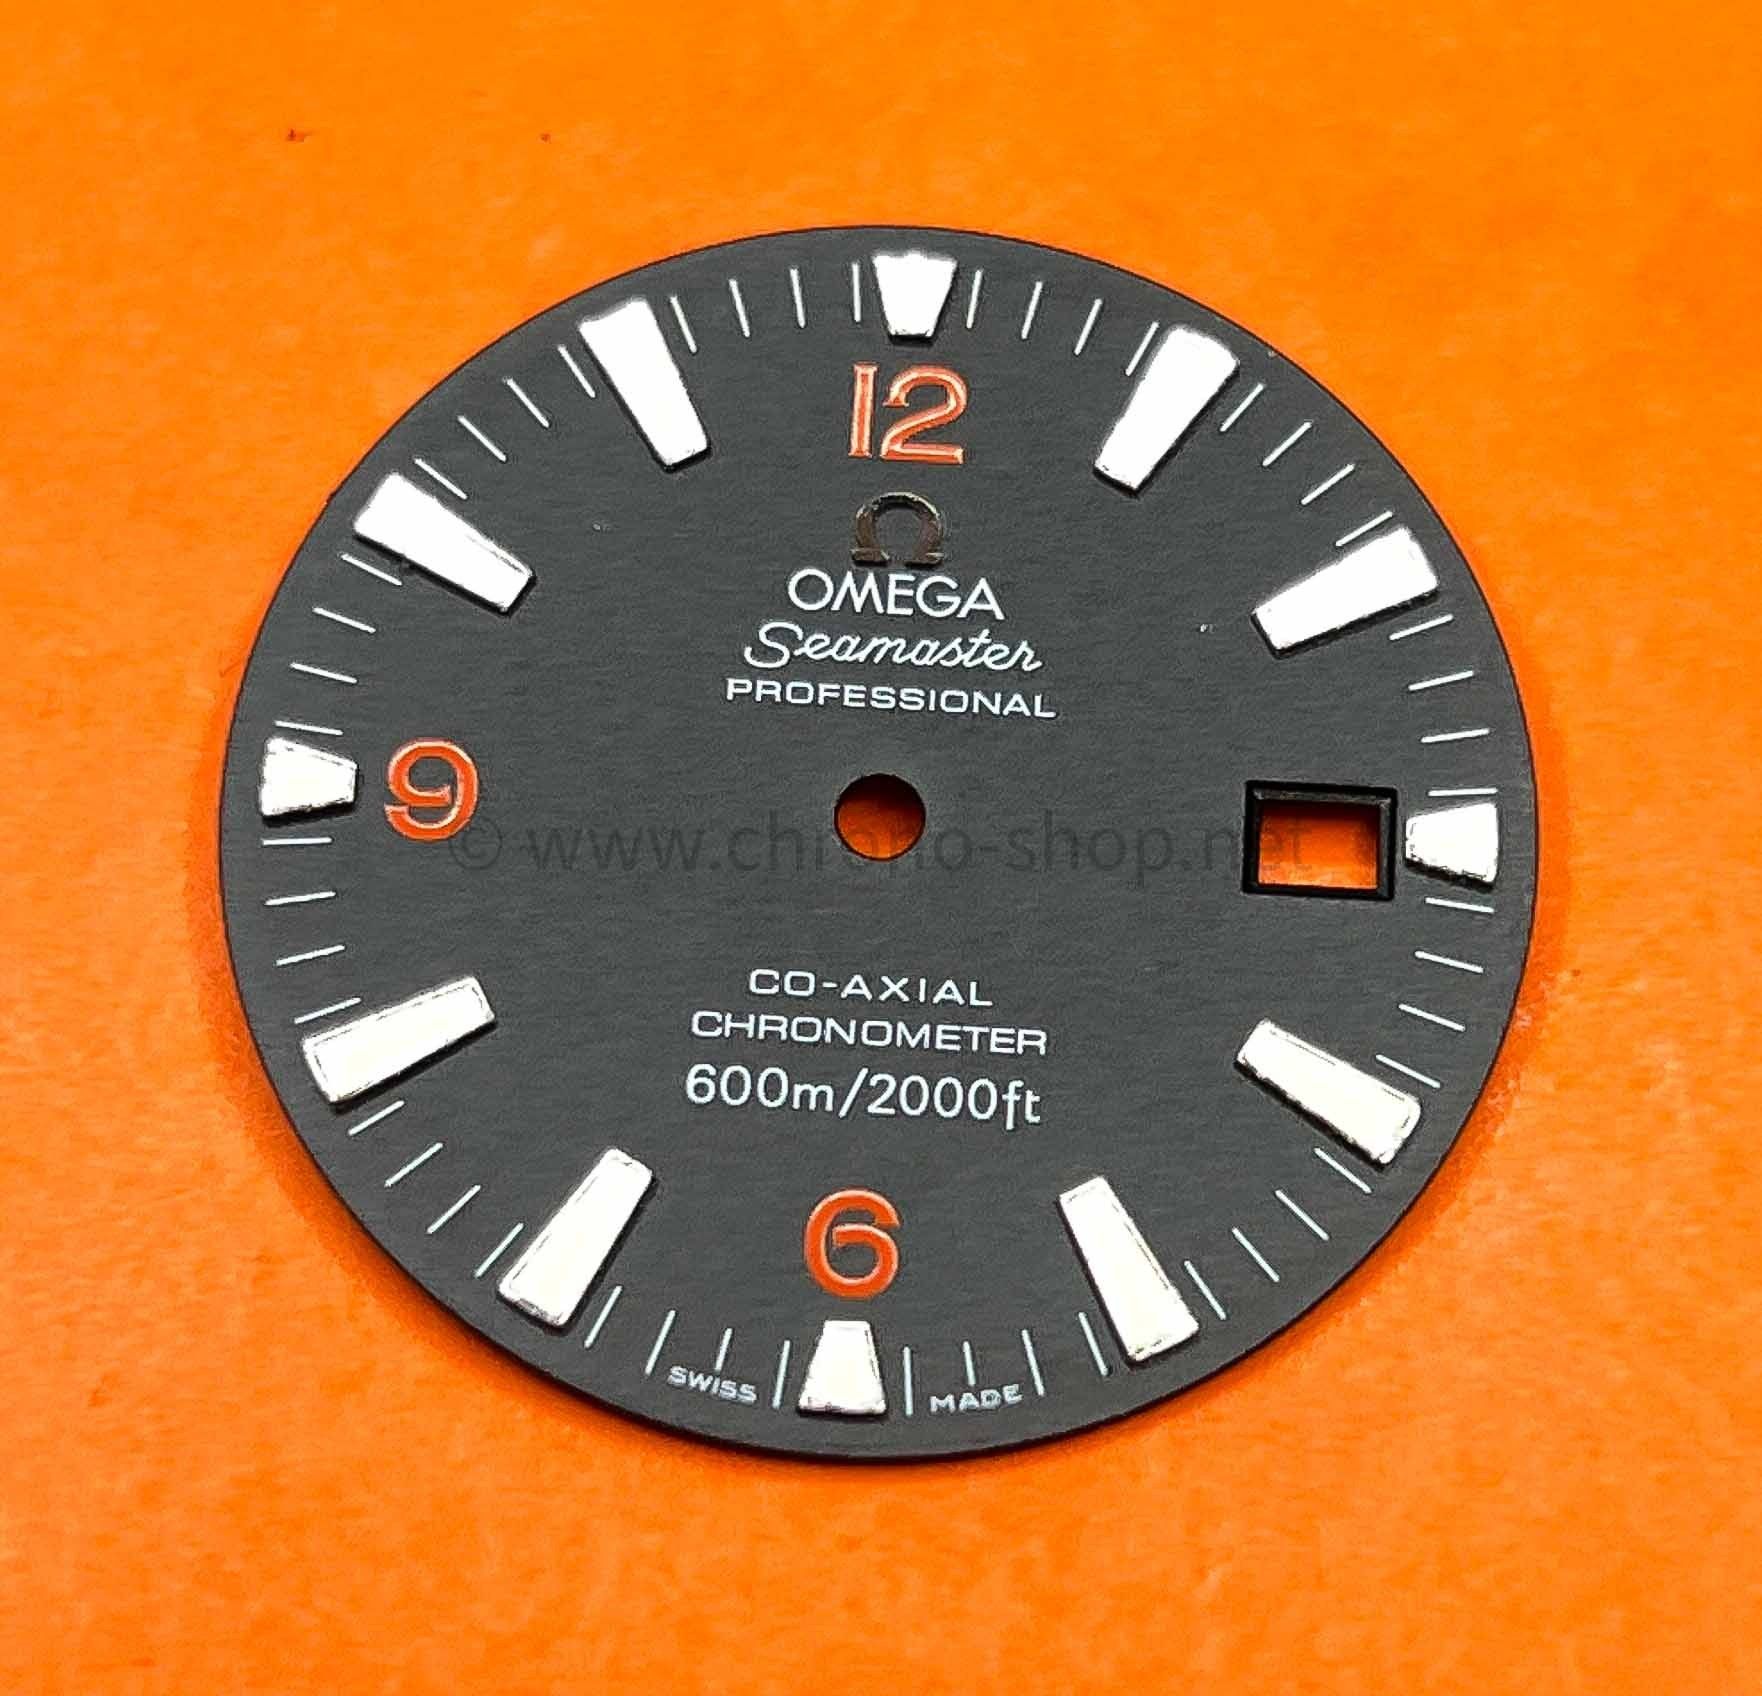 OMEGA Seamaster Professional 232.32.42.21.01.001 600m Planet Ocean Co-Axial chronometer Watch Orange black dial